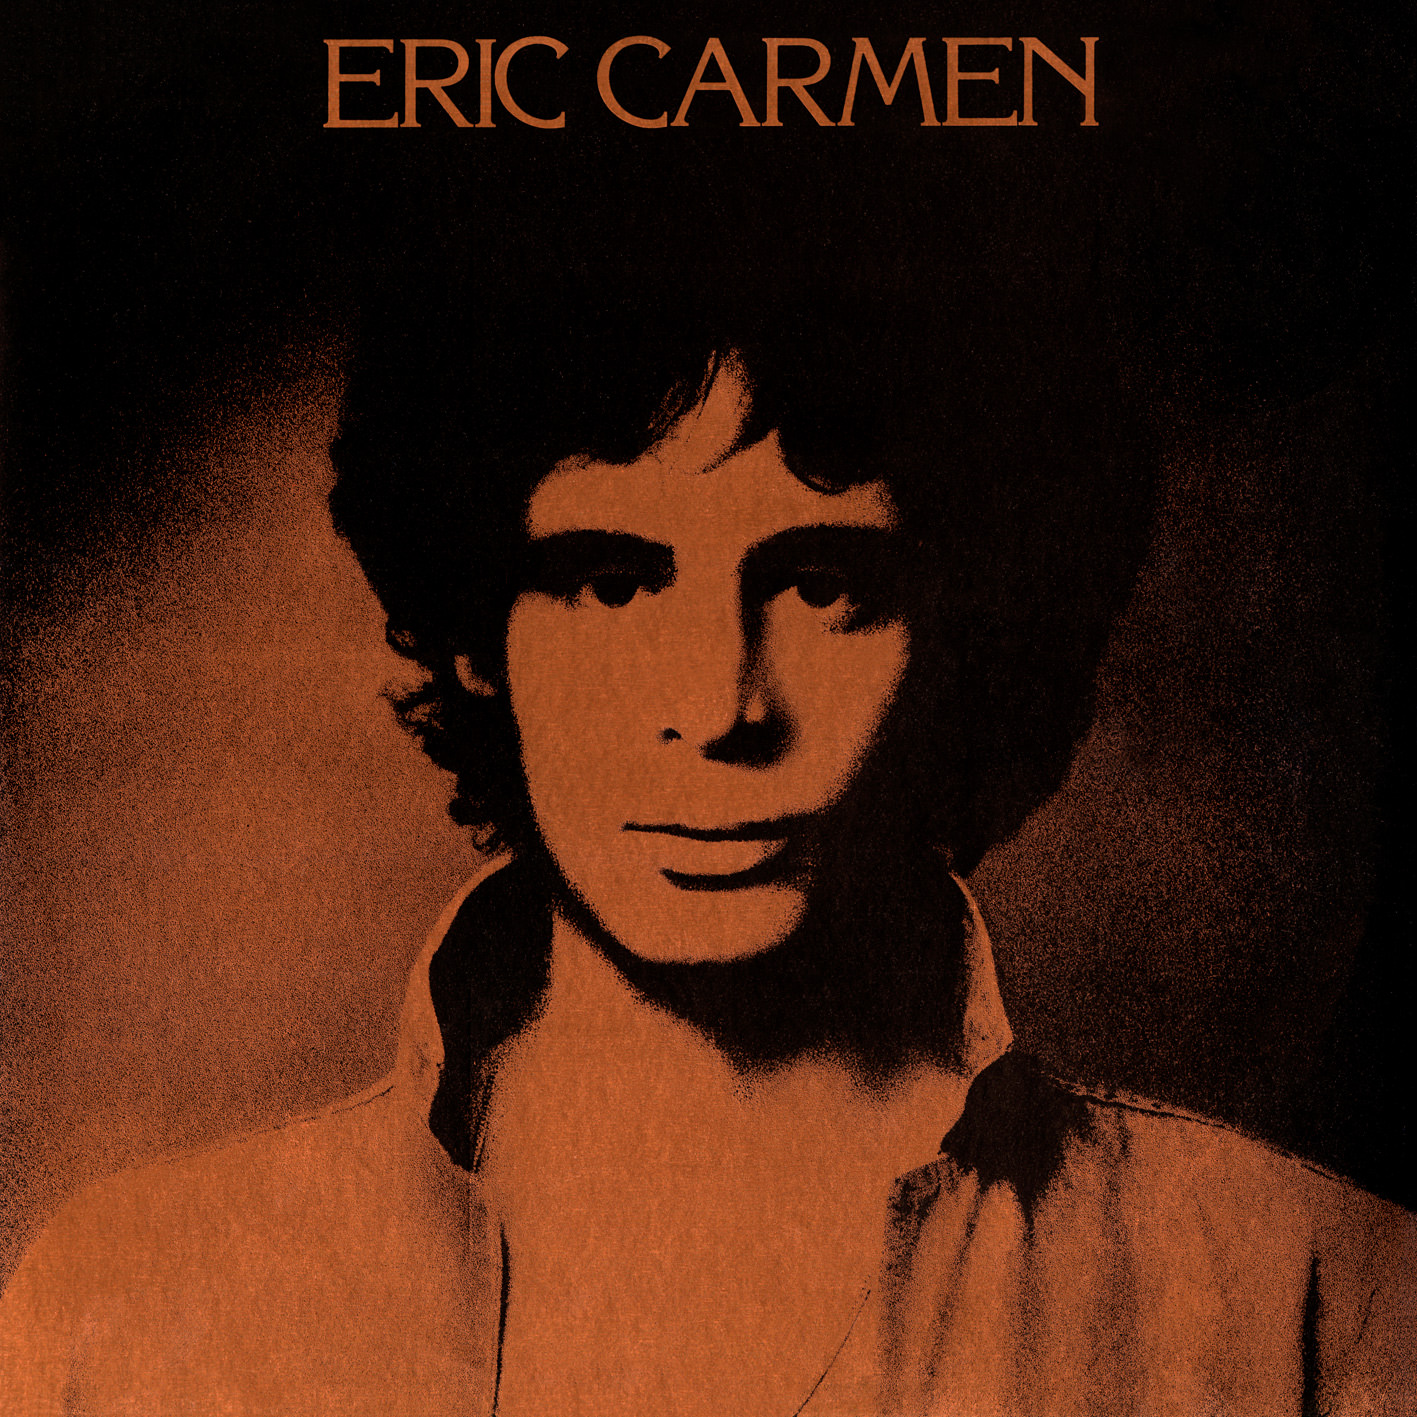 Eric Carmen – Eric Carmen (1975/2017) [HDTracks FLAC 24bit/96kHz]